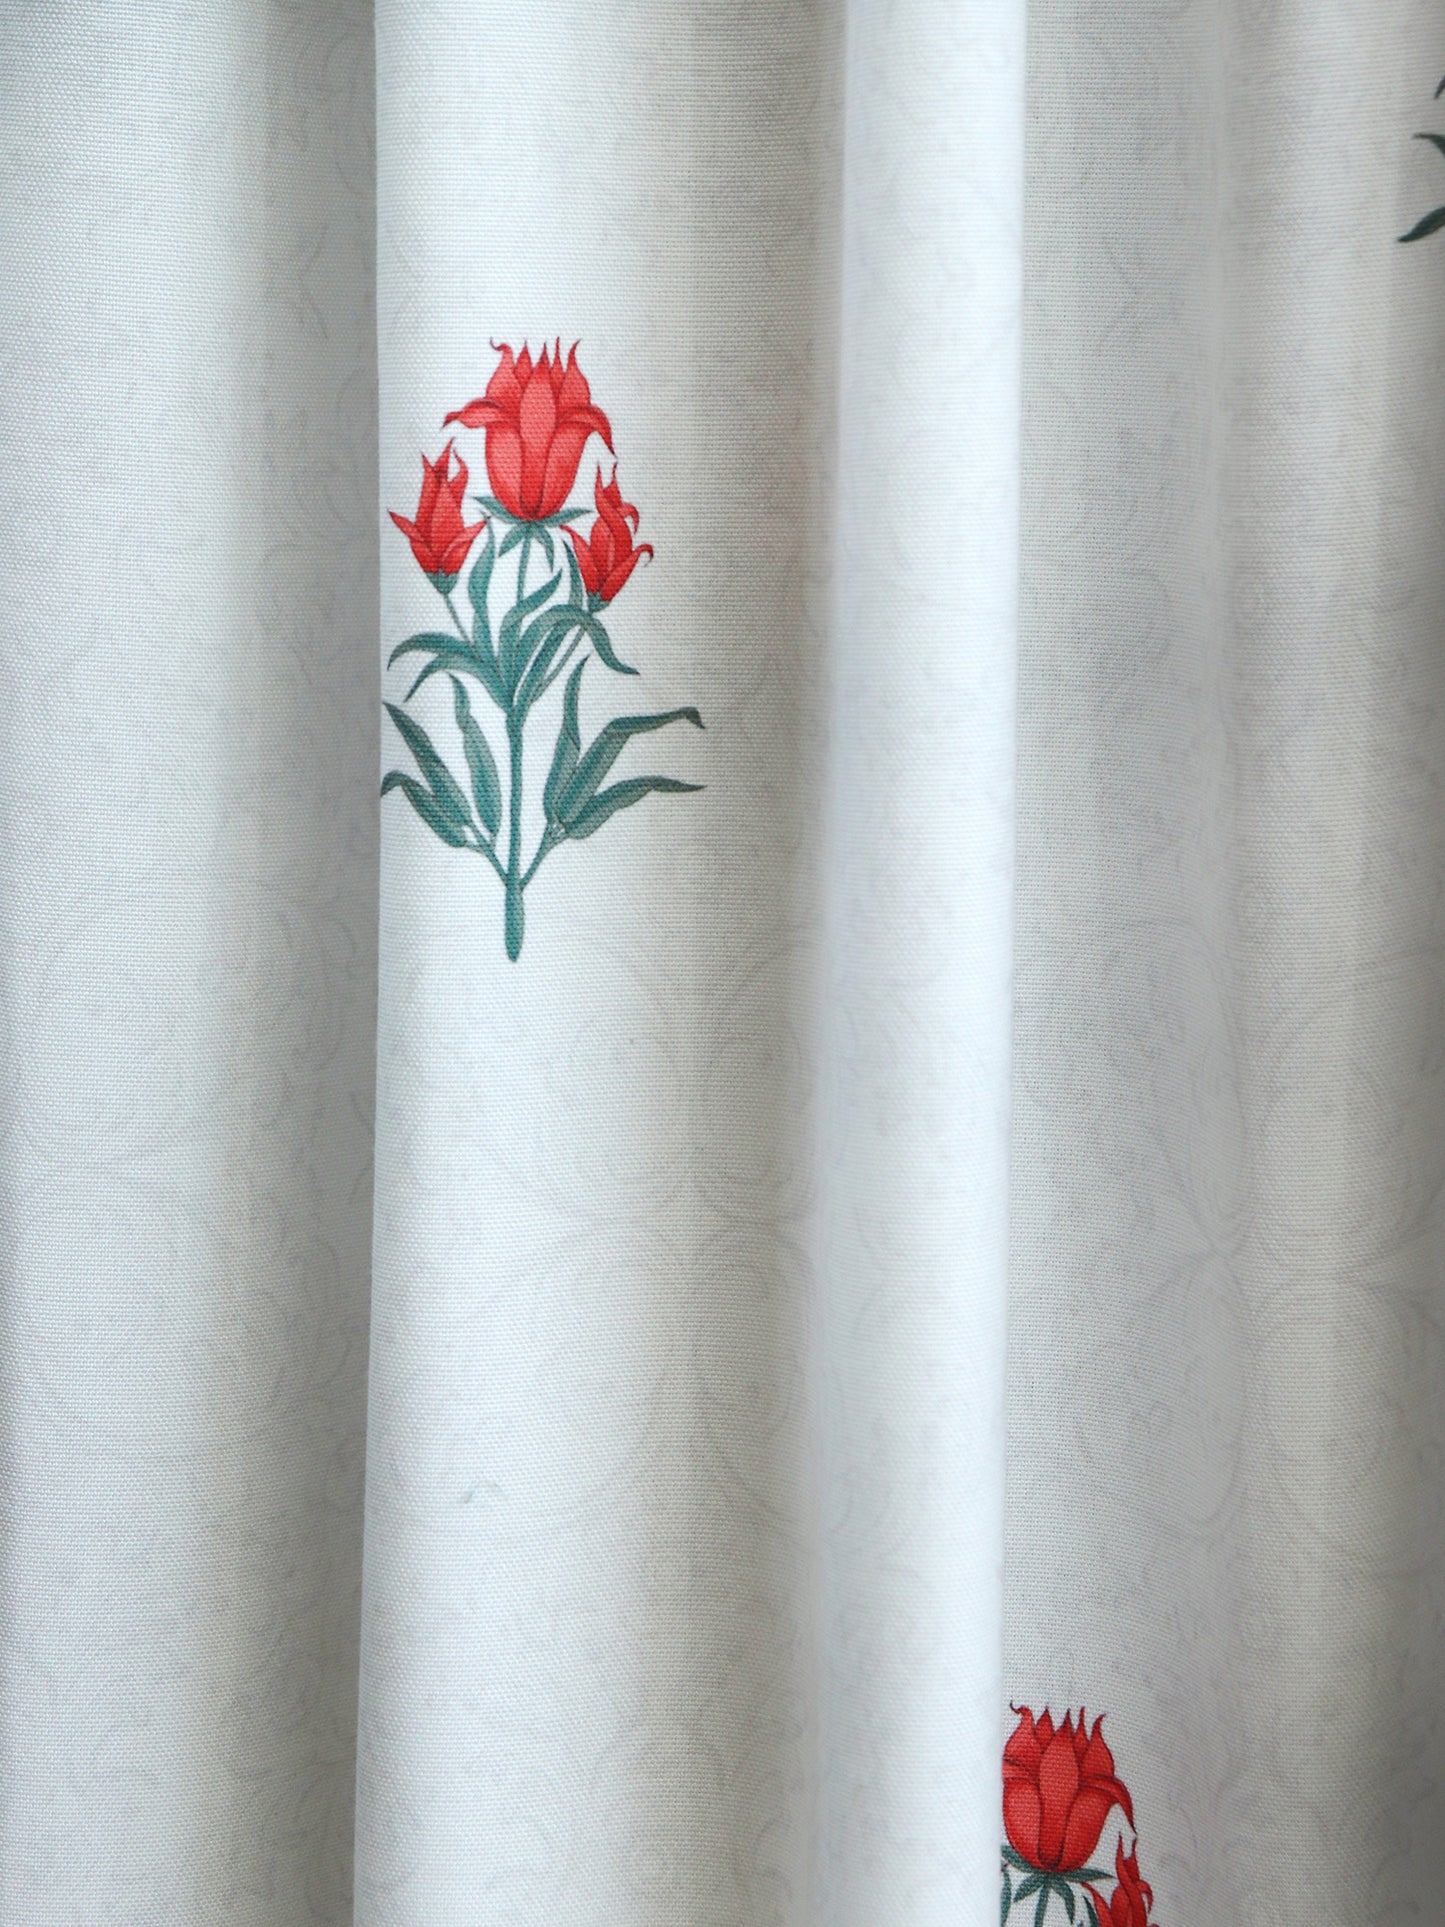 Door Curtain Cotton Blend Floral Digital Printed in White Orange Color - 50" x 84" (Hidden Loop)